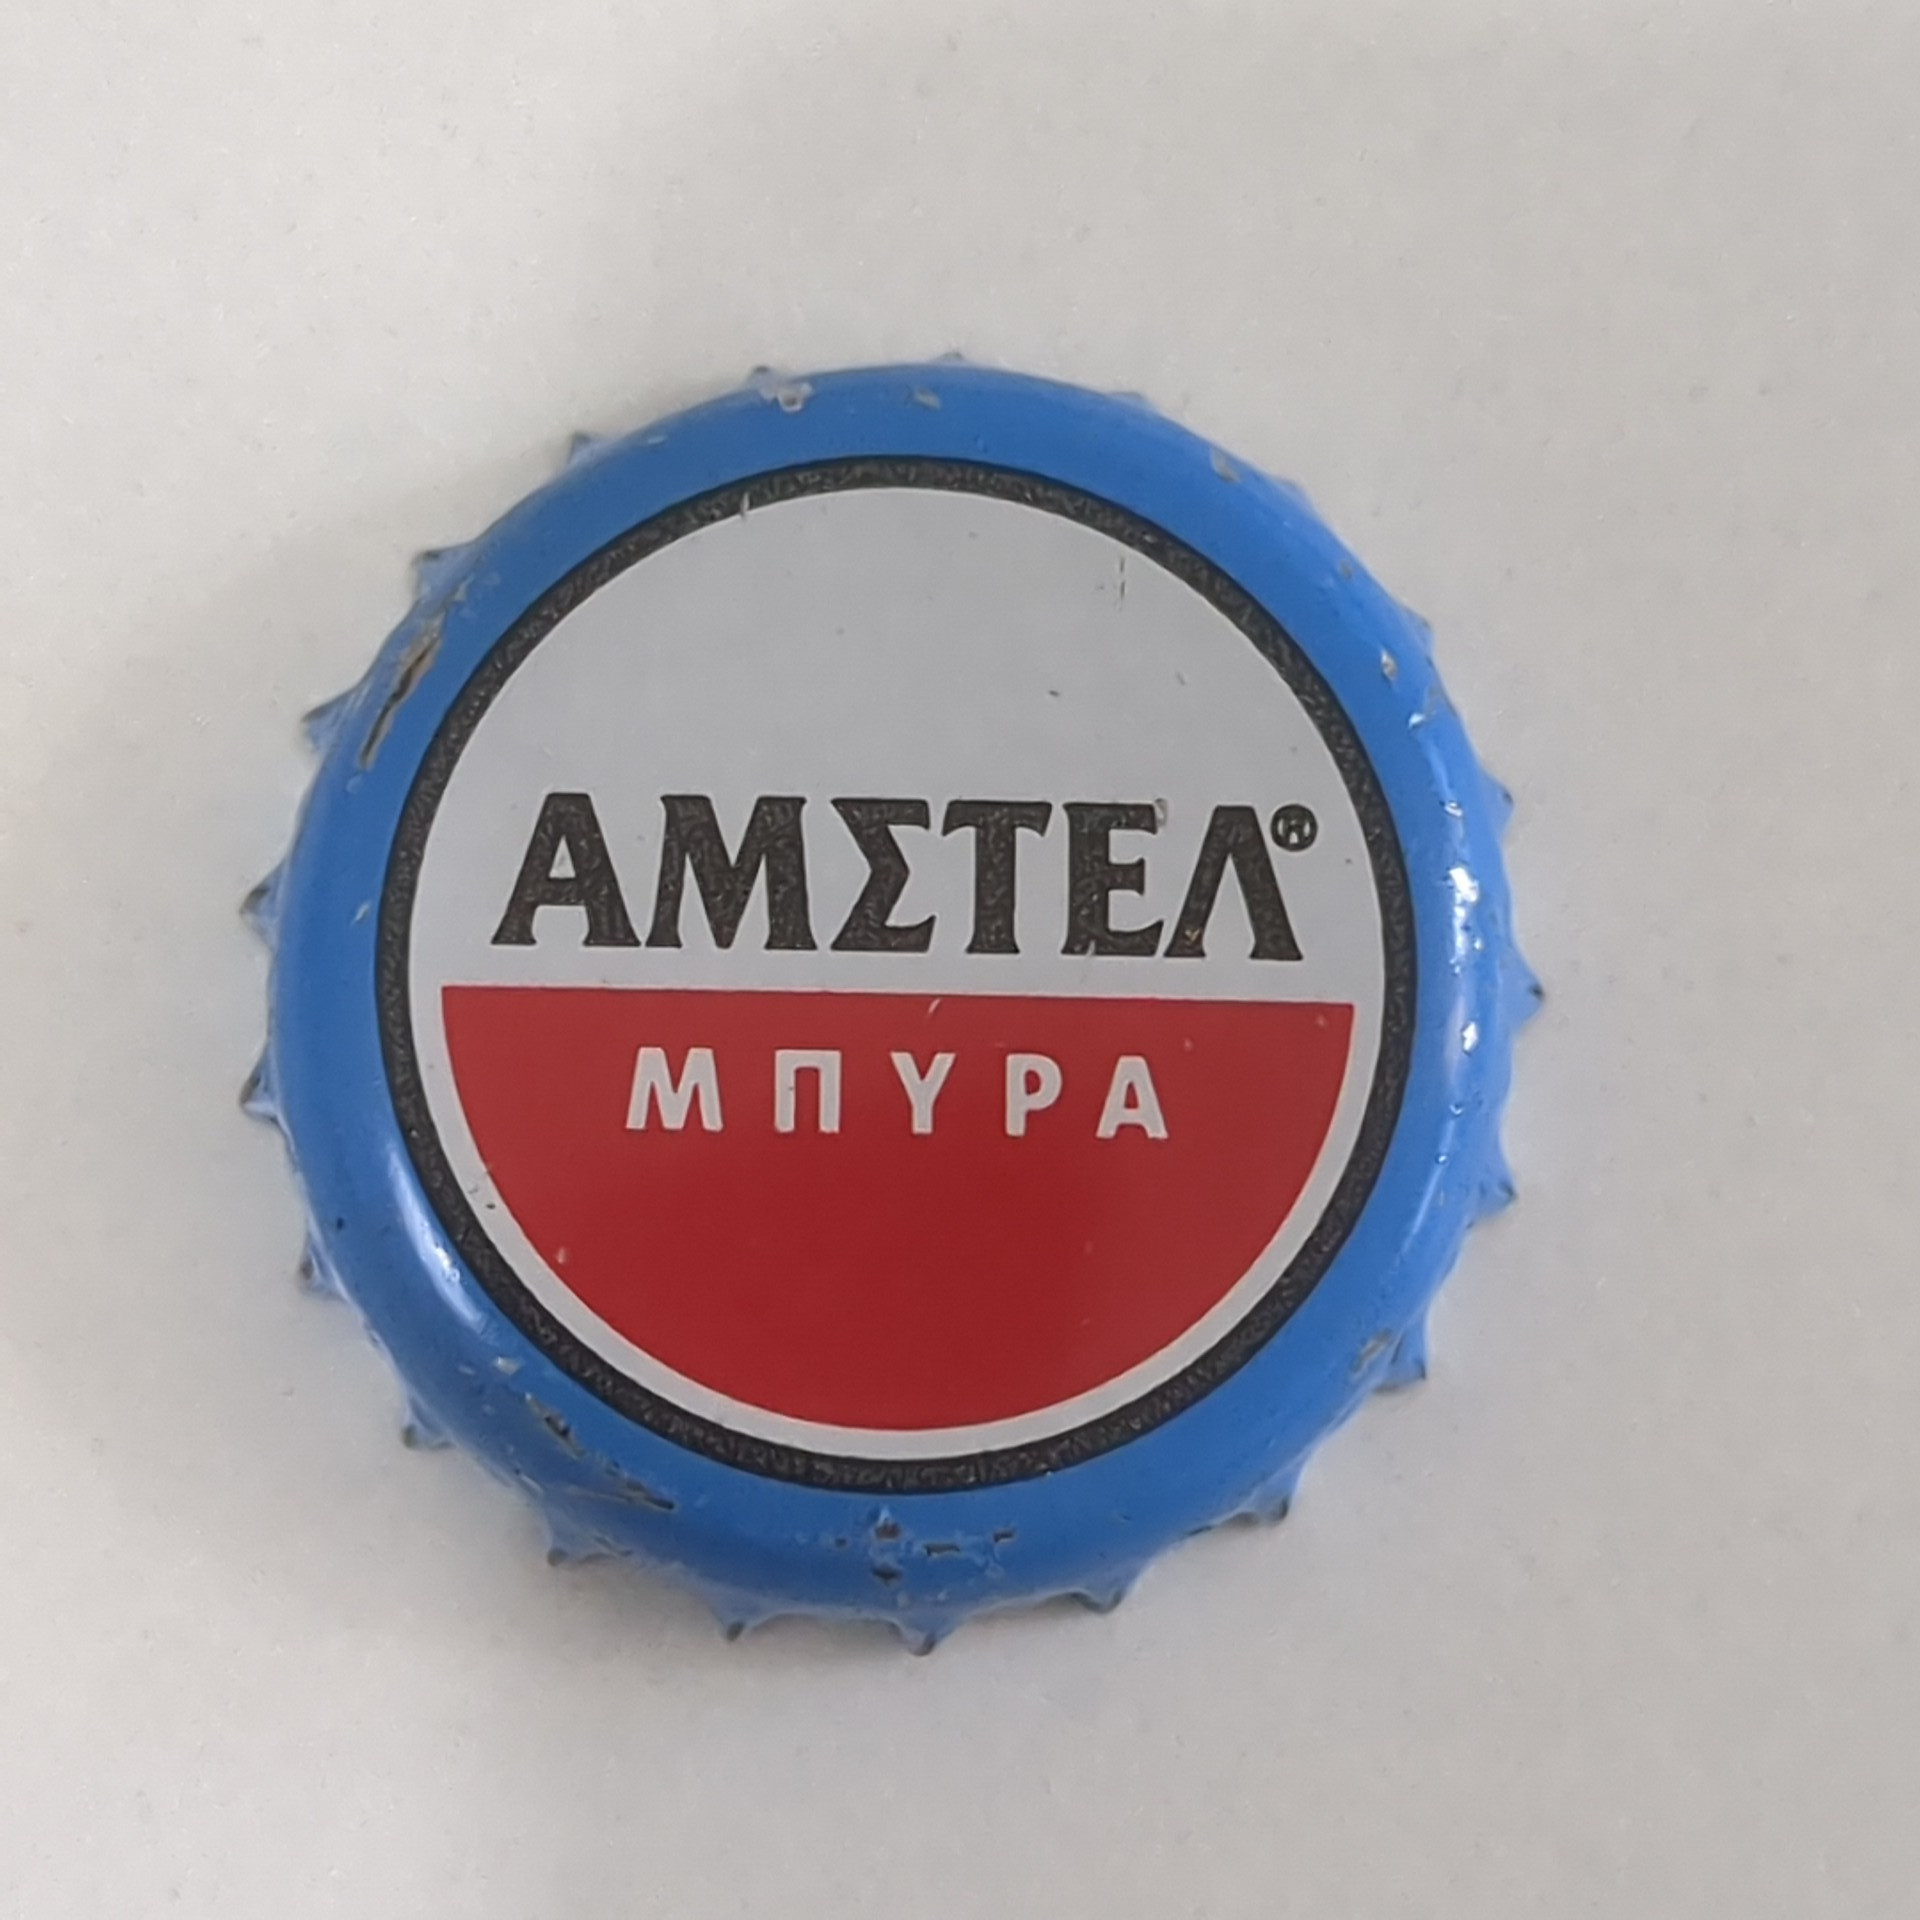 Amstel bira